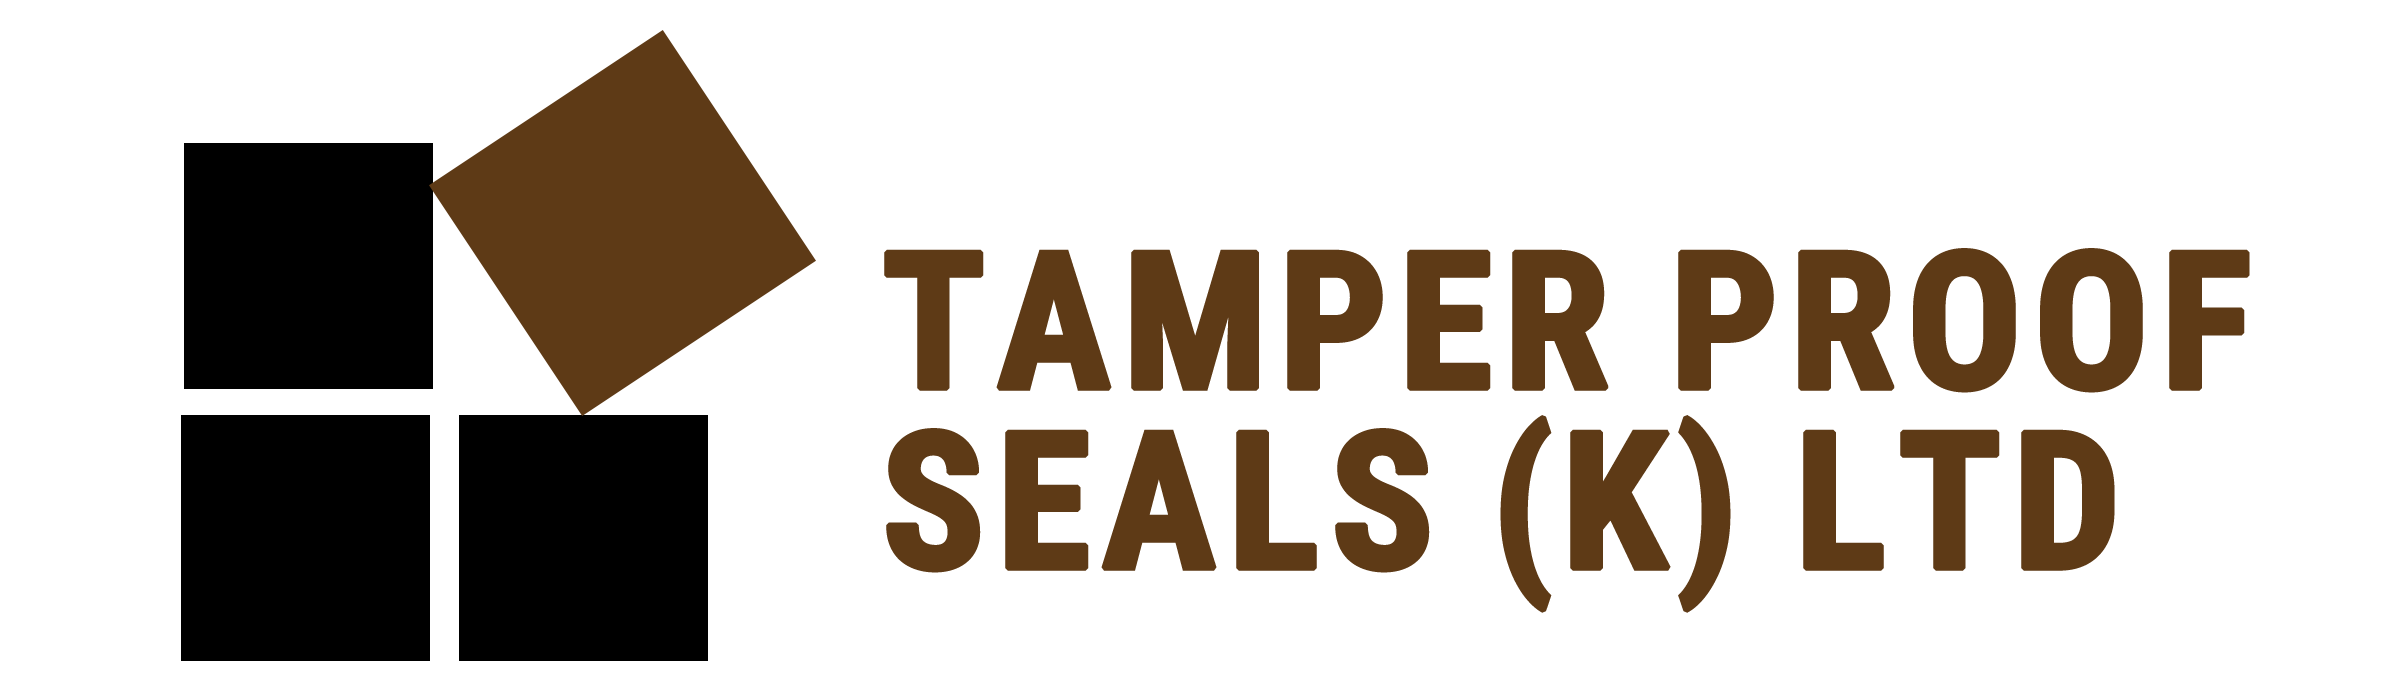 Tamper Proof Seals